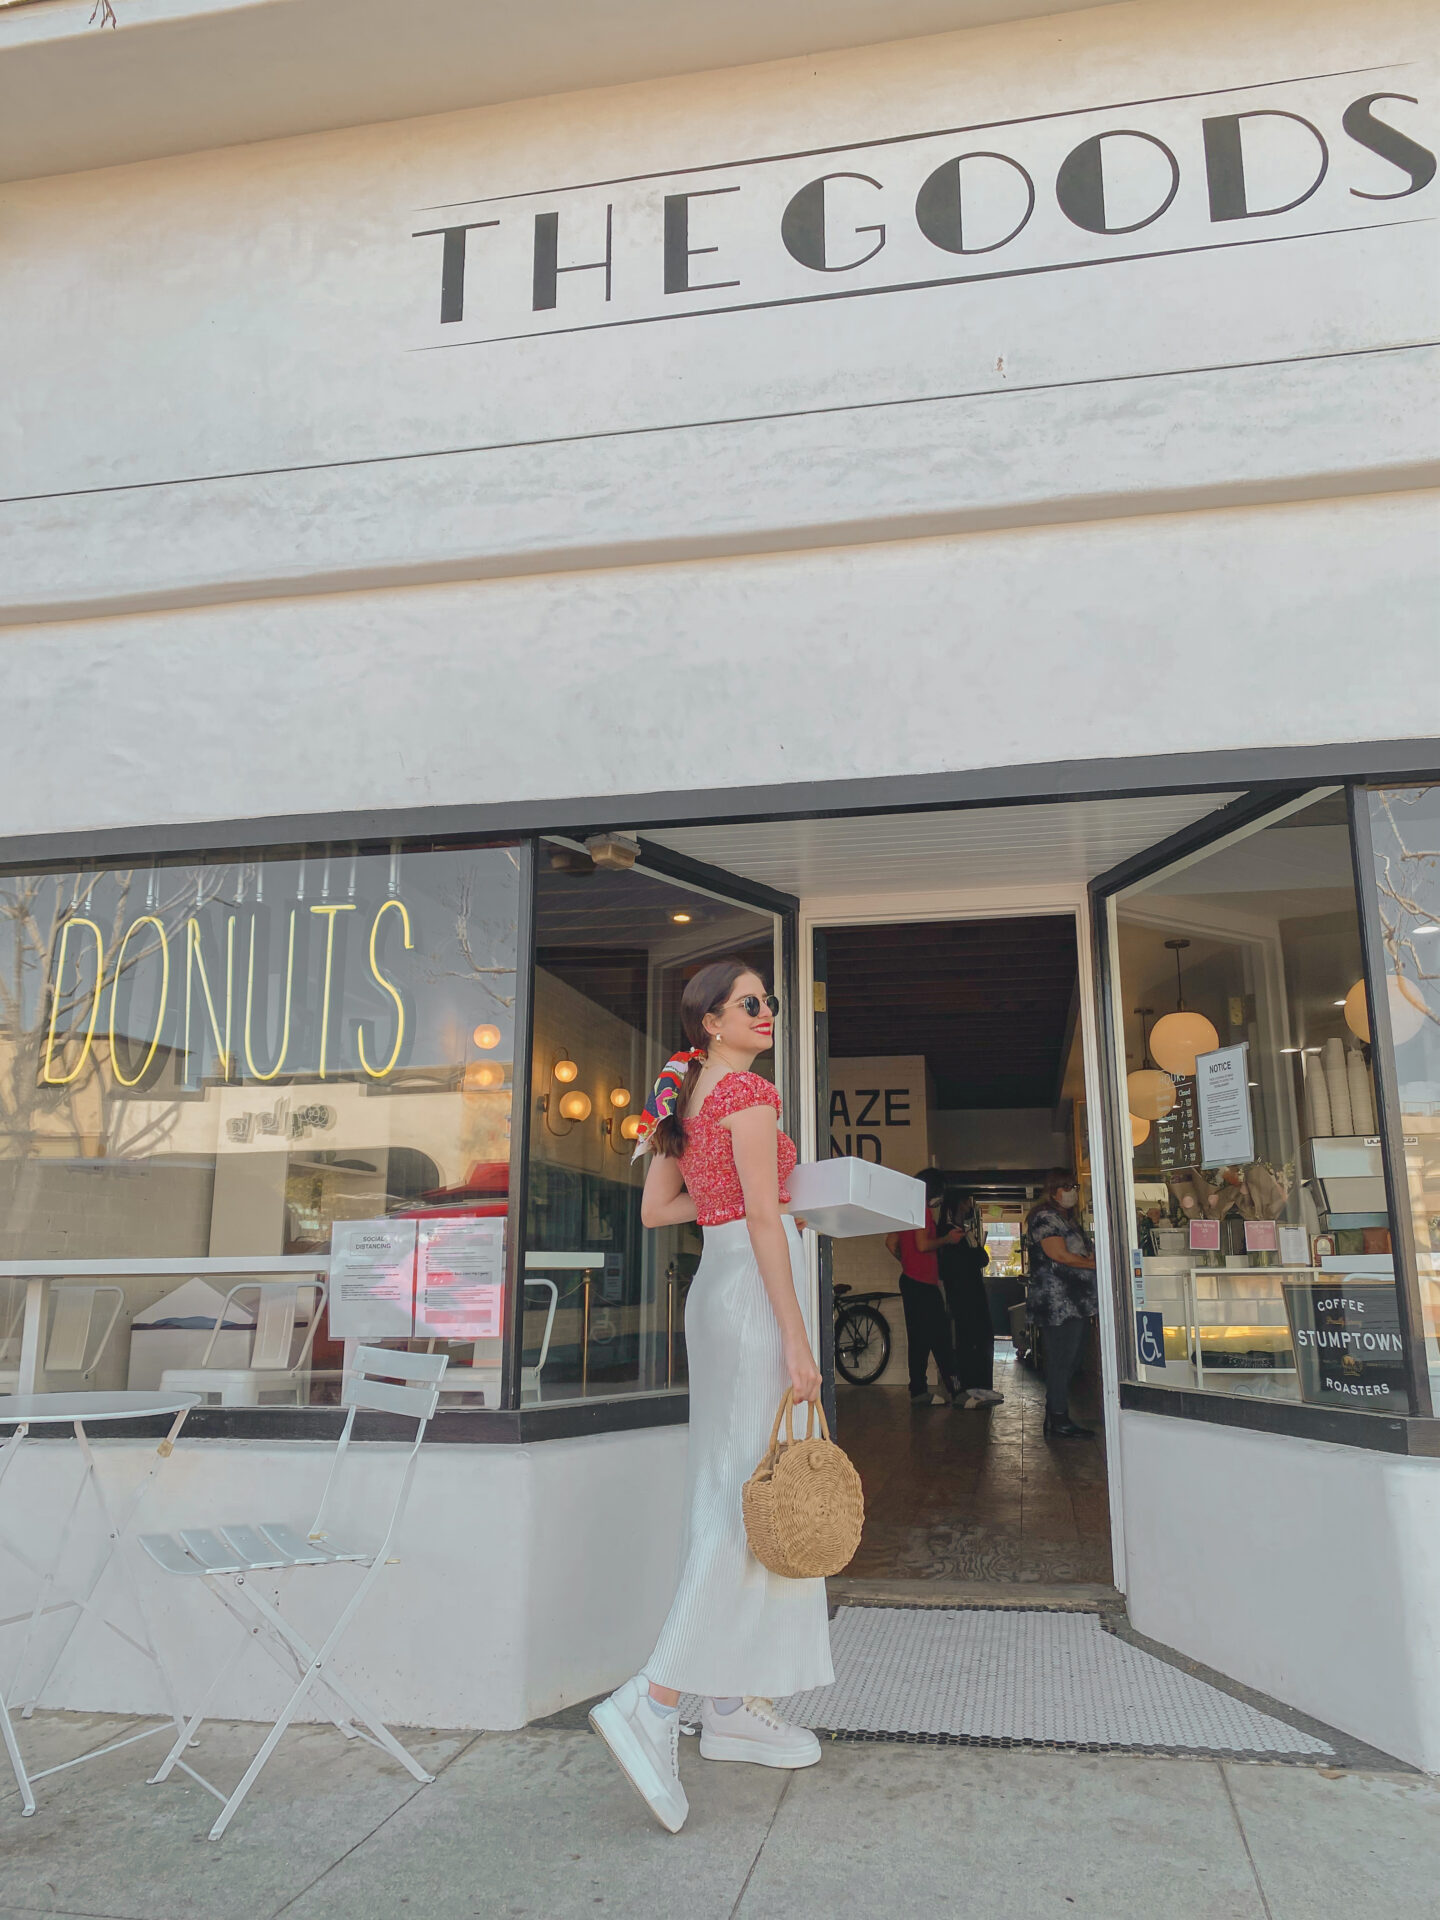 The Goods Doughnuts shop in Carlsbad, San Diego doughnut shop